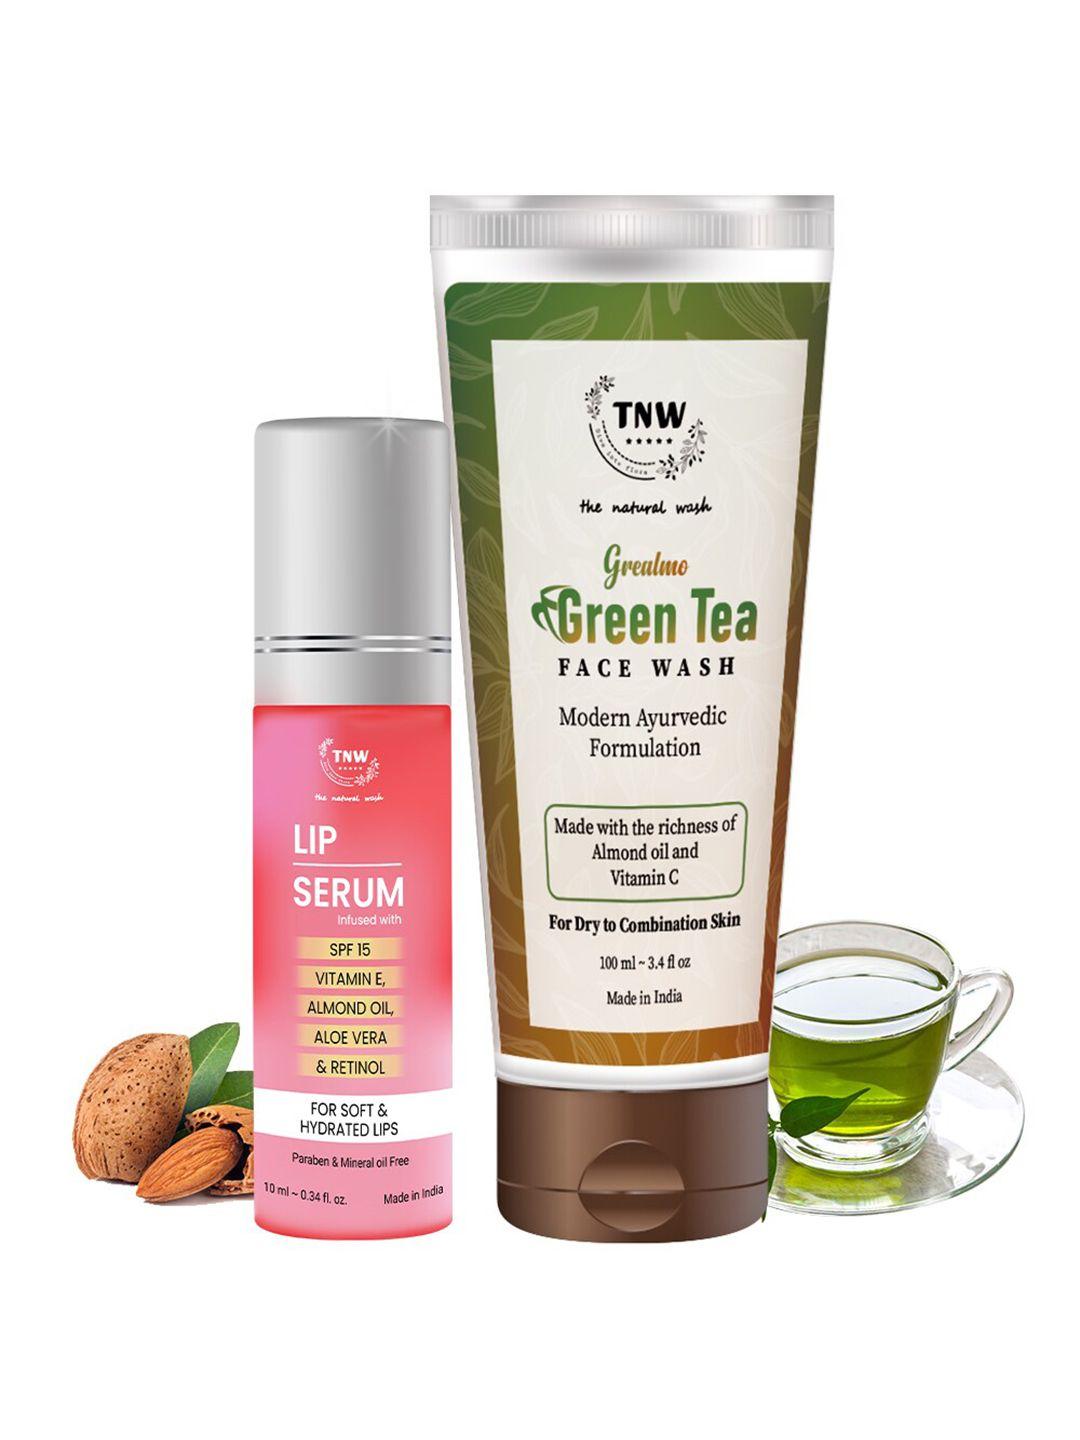 tnw the natural wash lip serum and grealmo green tea face wash